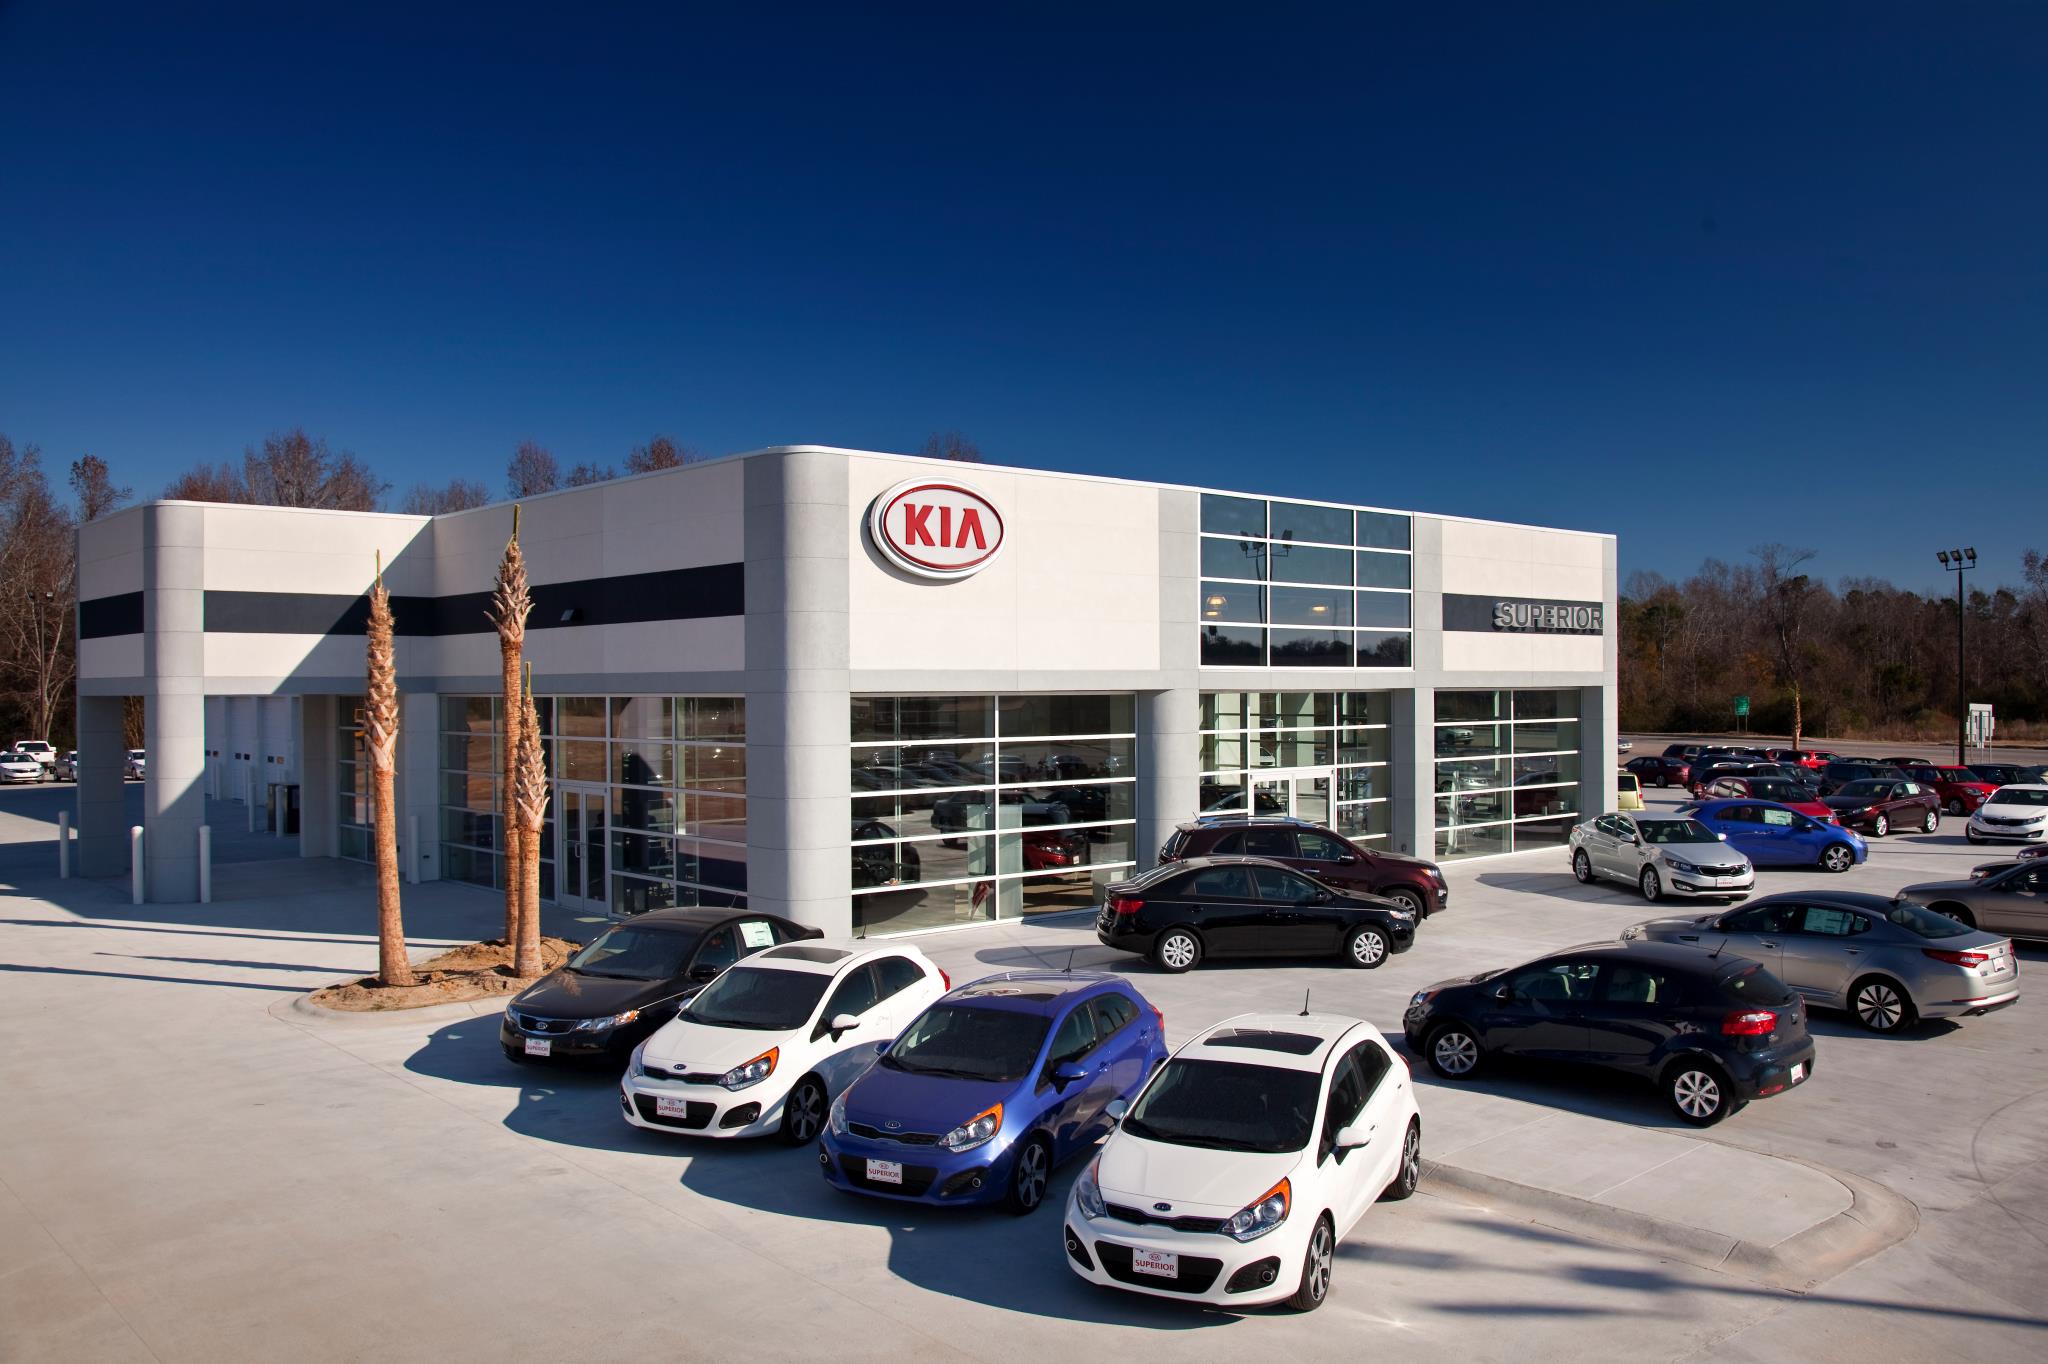 Superior Kia dealership near Orangeburg, South Carolina